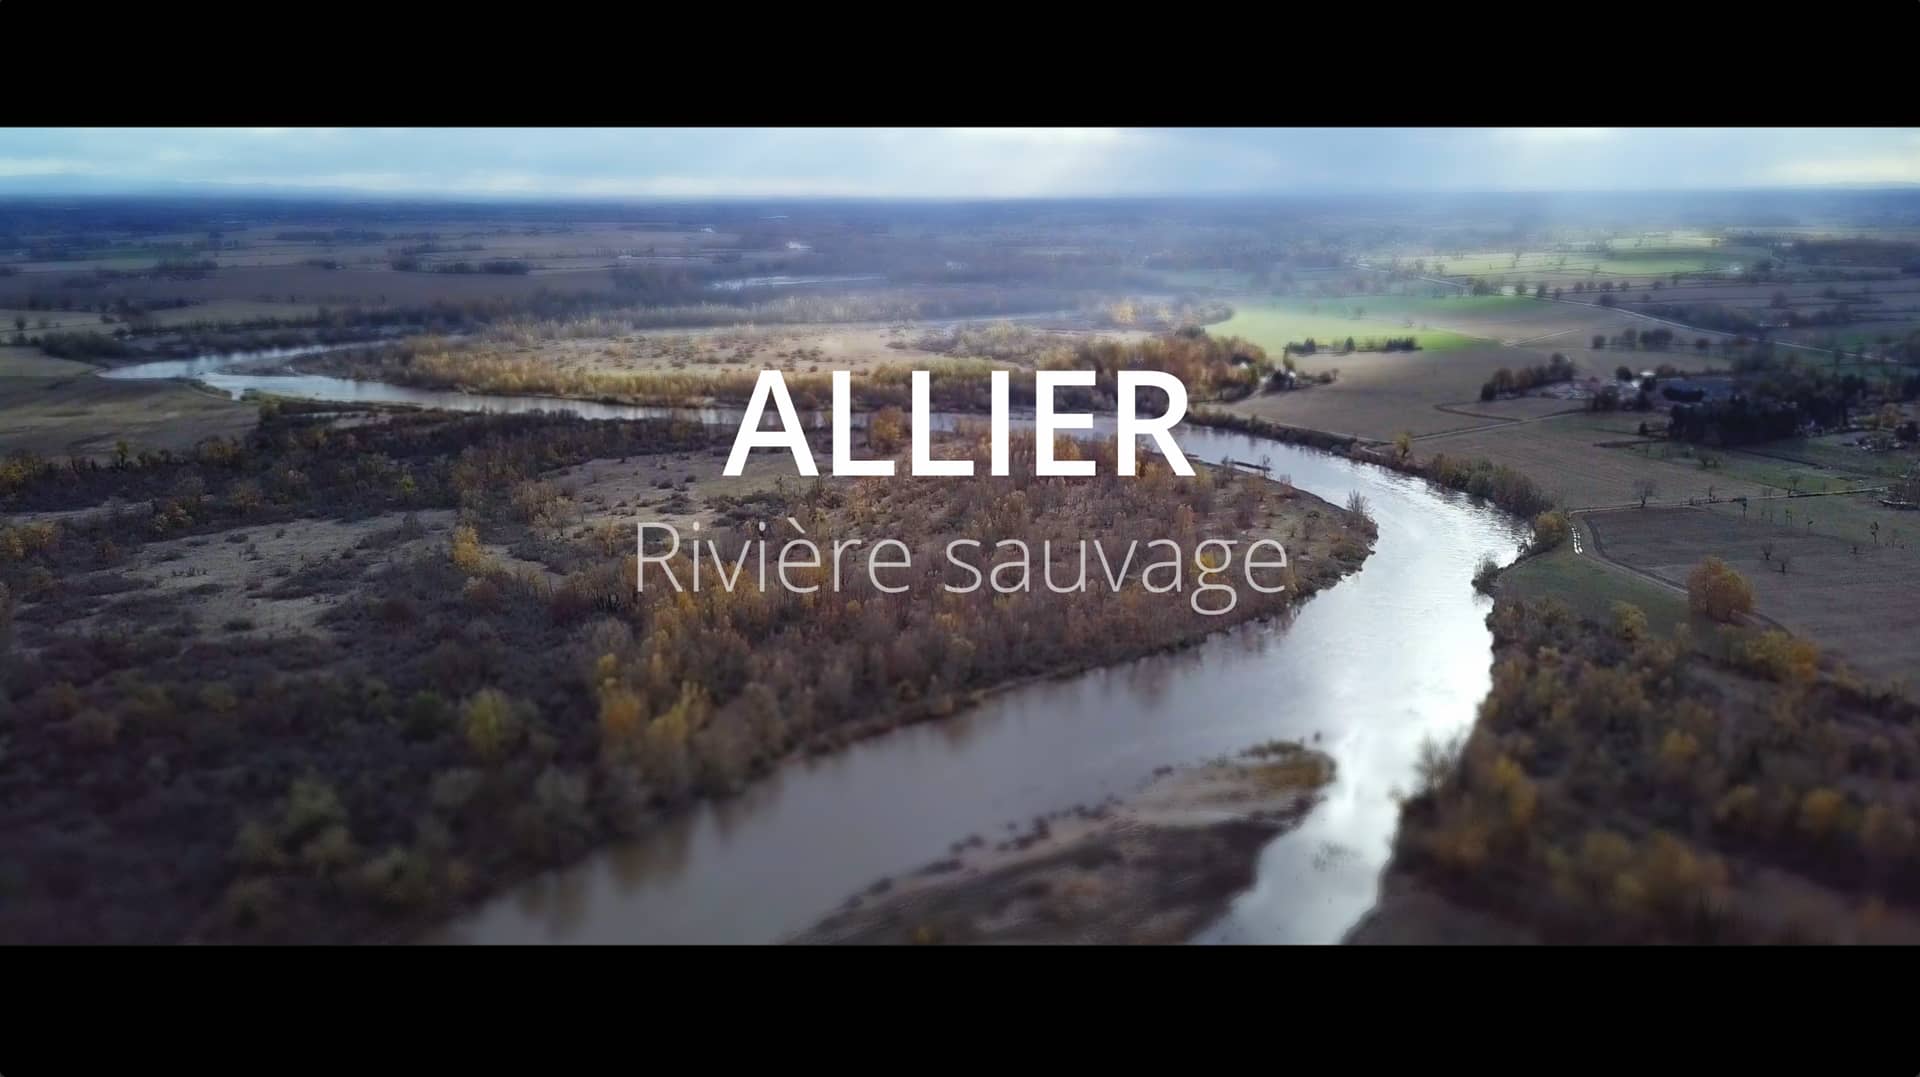 Allier, rivière sauvage (Bande annonce) on Vimeo